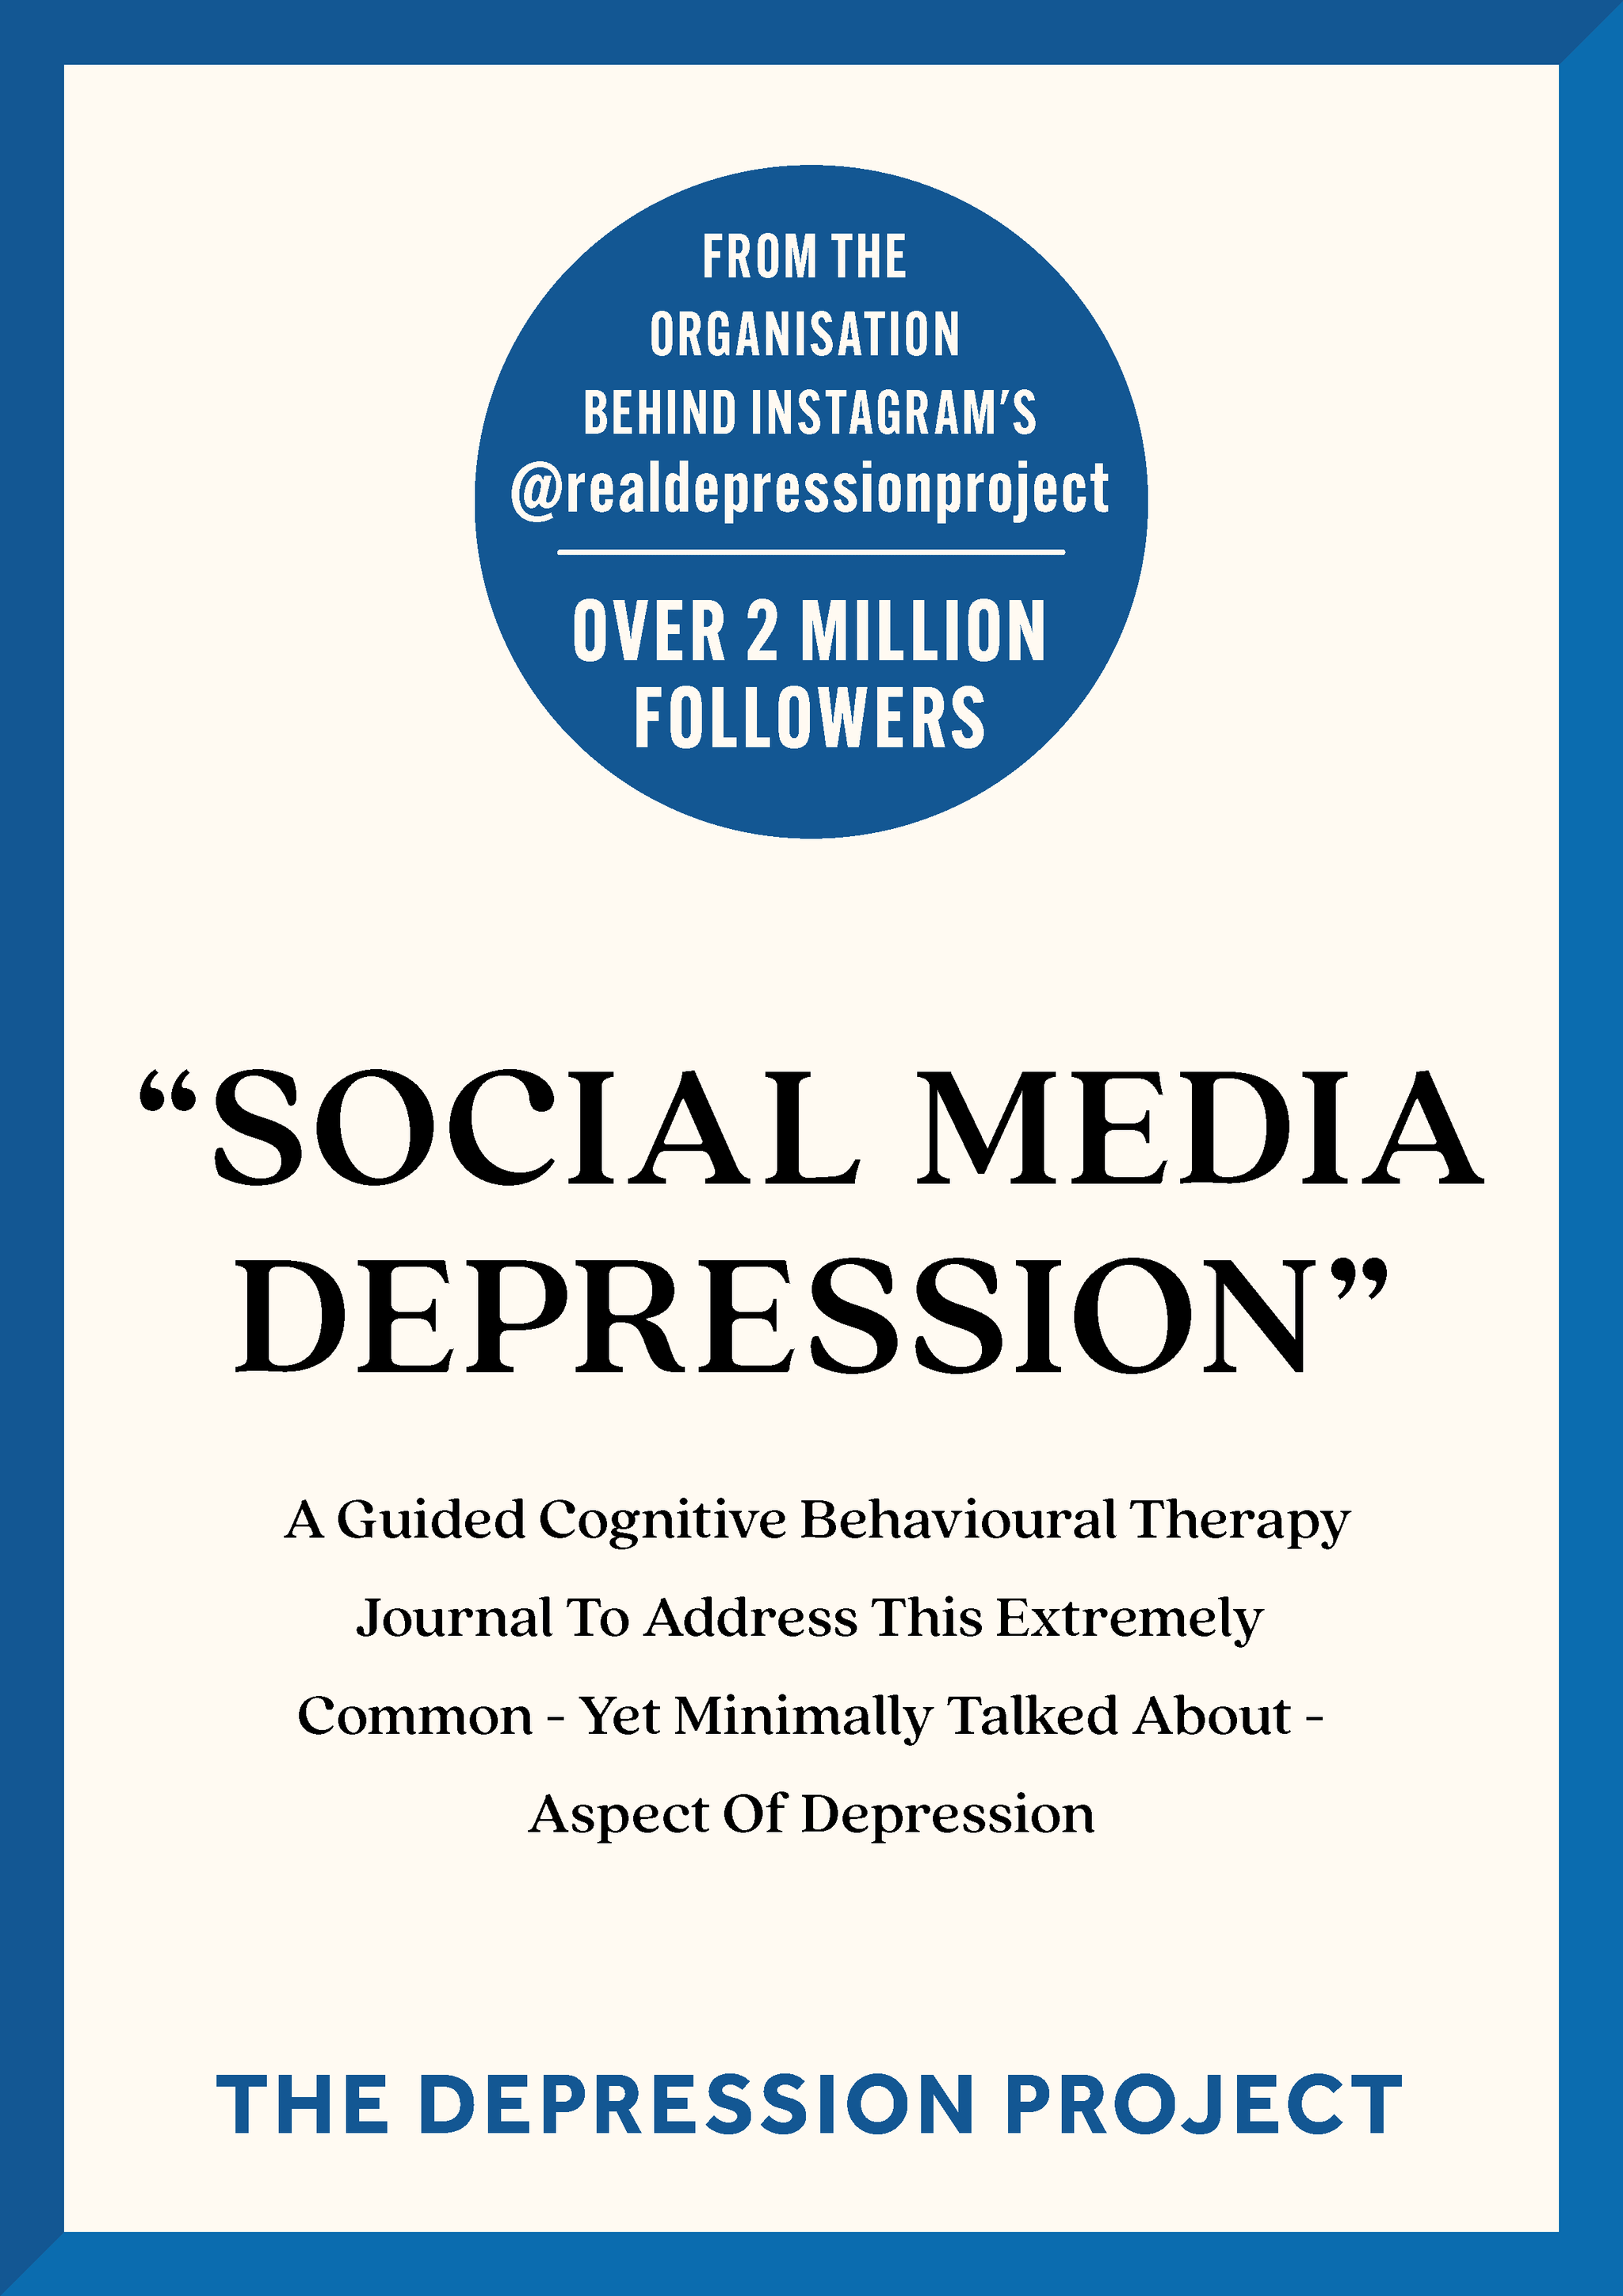 depression caused by social media essay